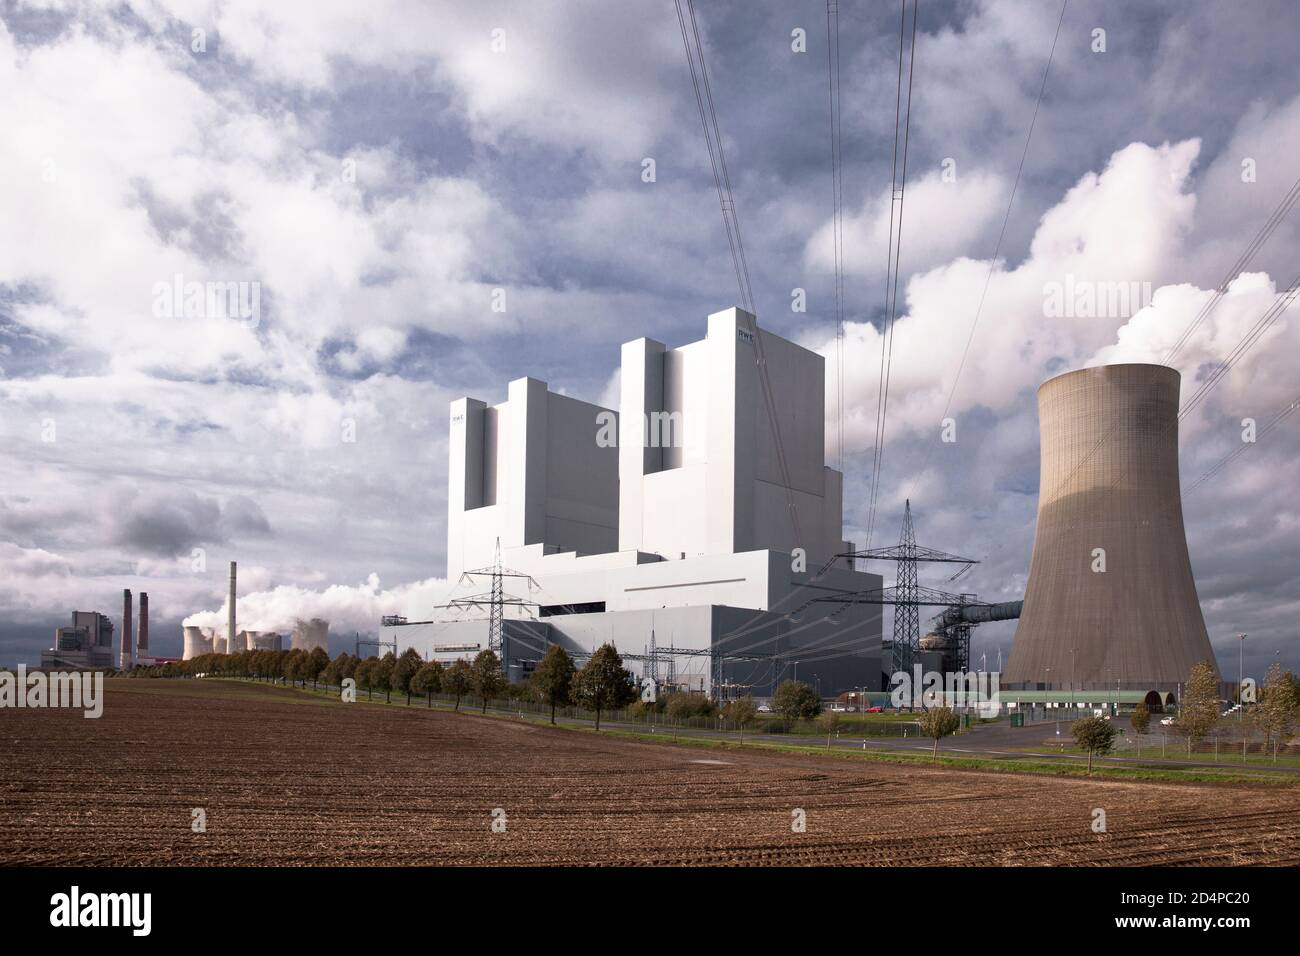 the lignite-fired power station Neurath in Grevenbroich, operated by RWE Power AG, North Rhine-Westphalia, Germany.  das Braunkohlekraftwerk Neurath b Stock Photo